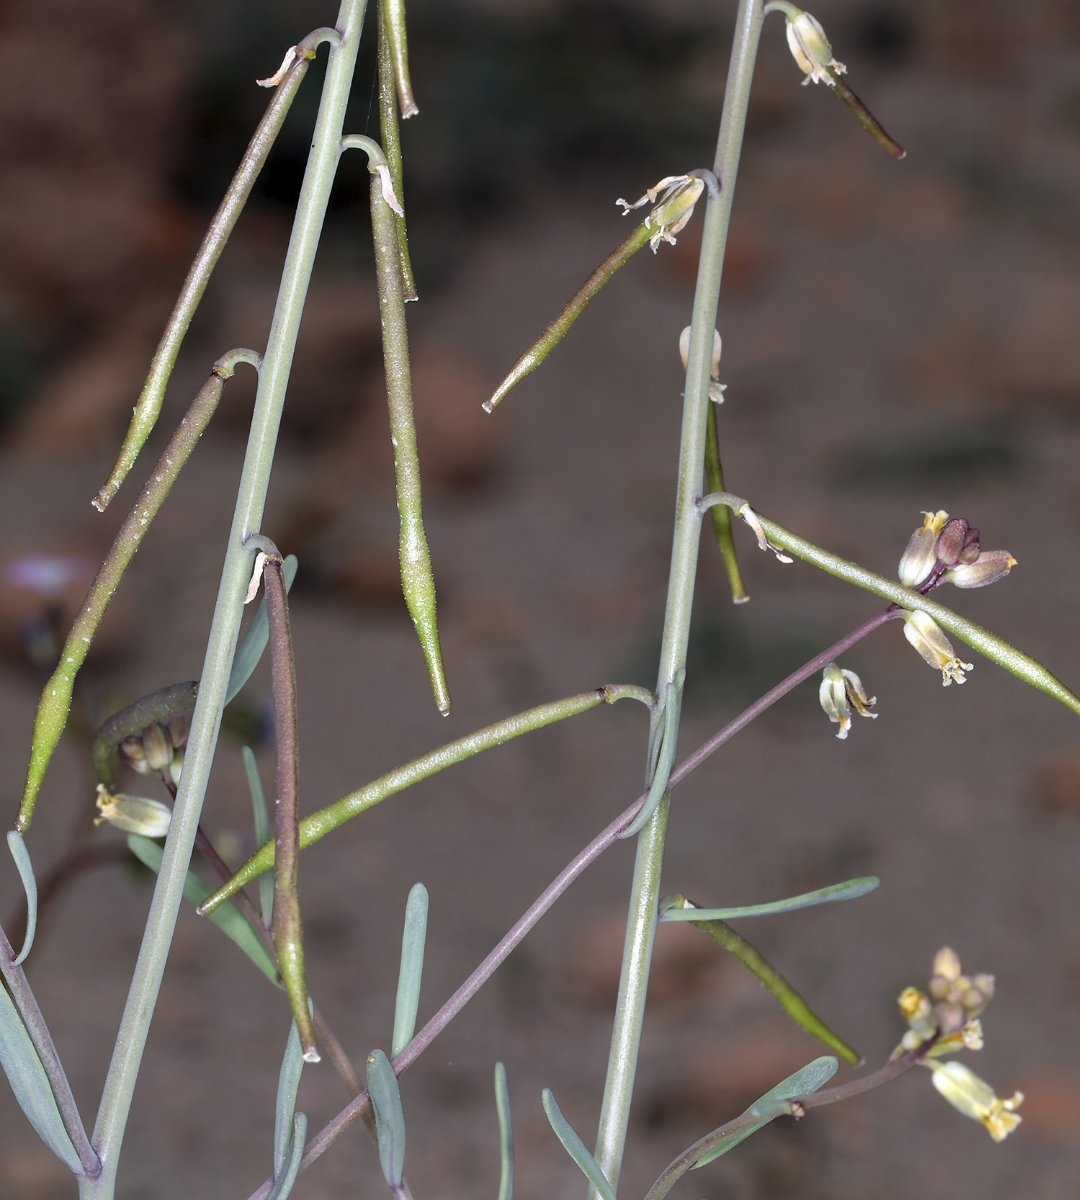 Streptanthella longirostris